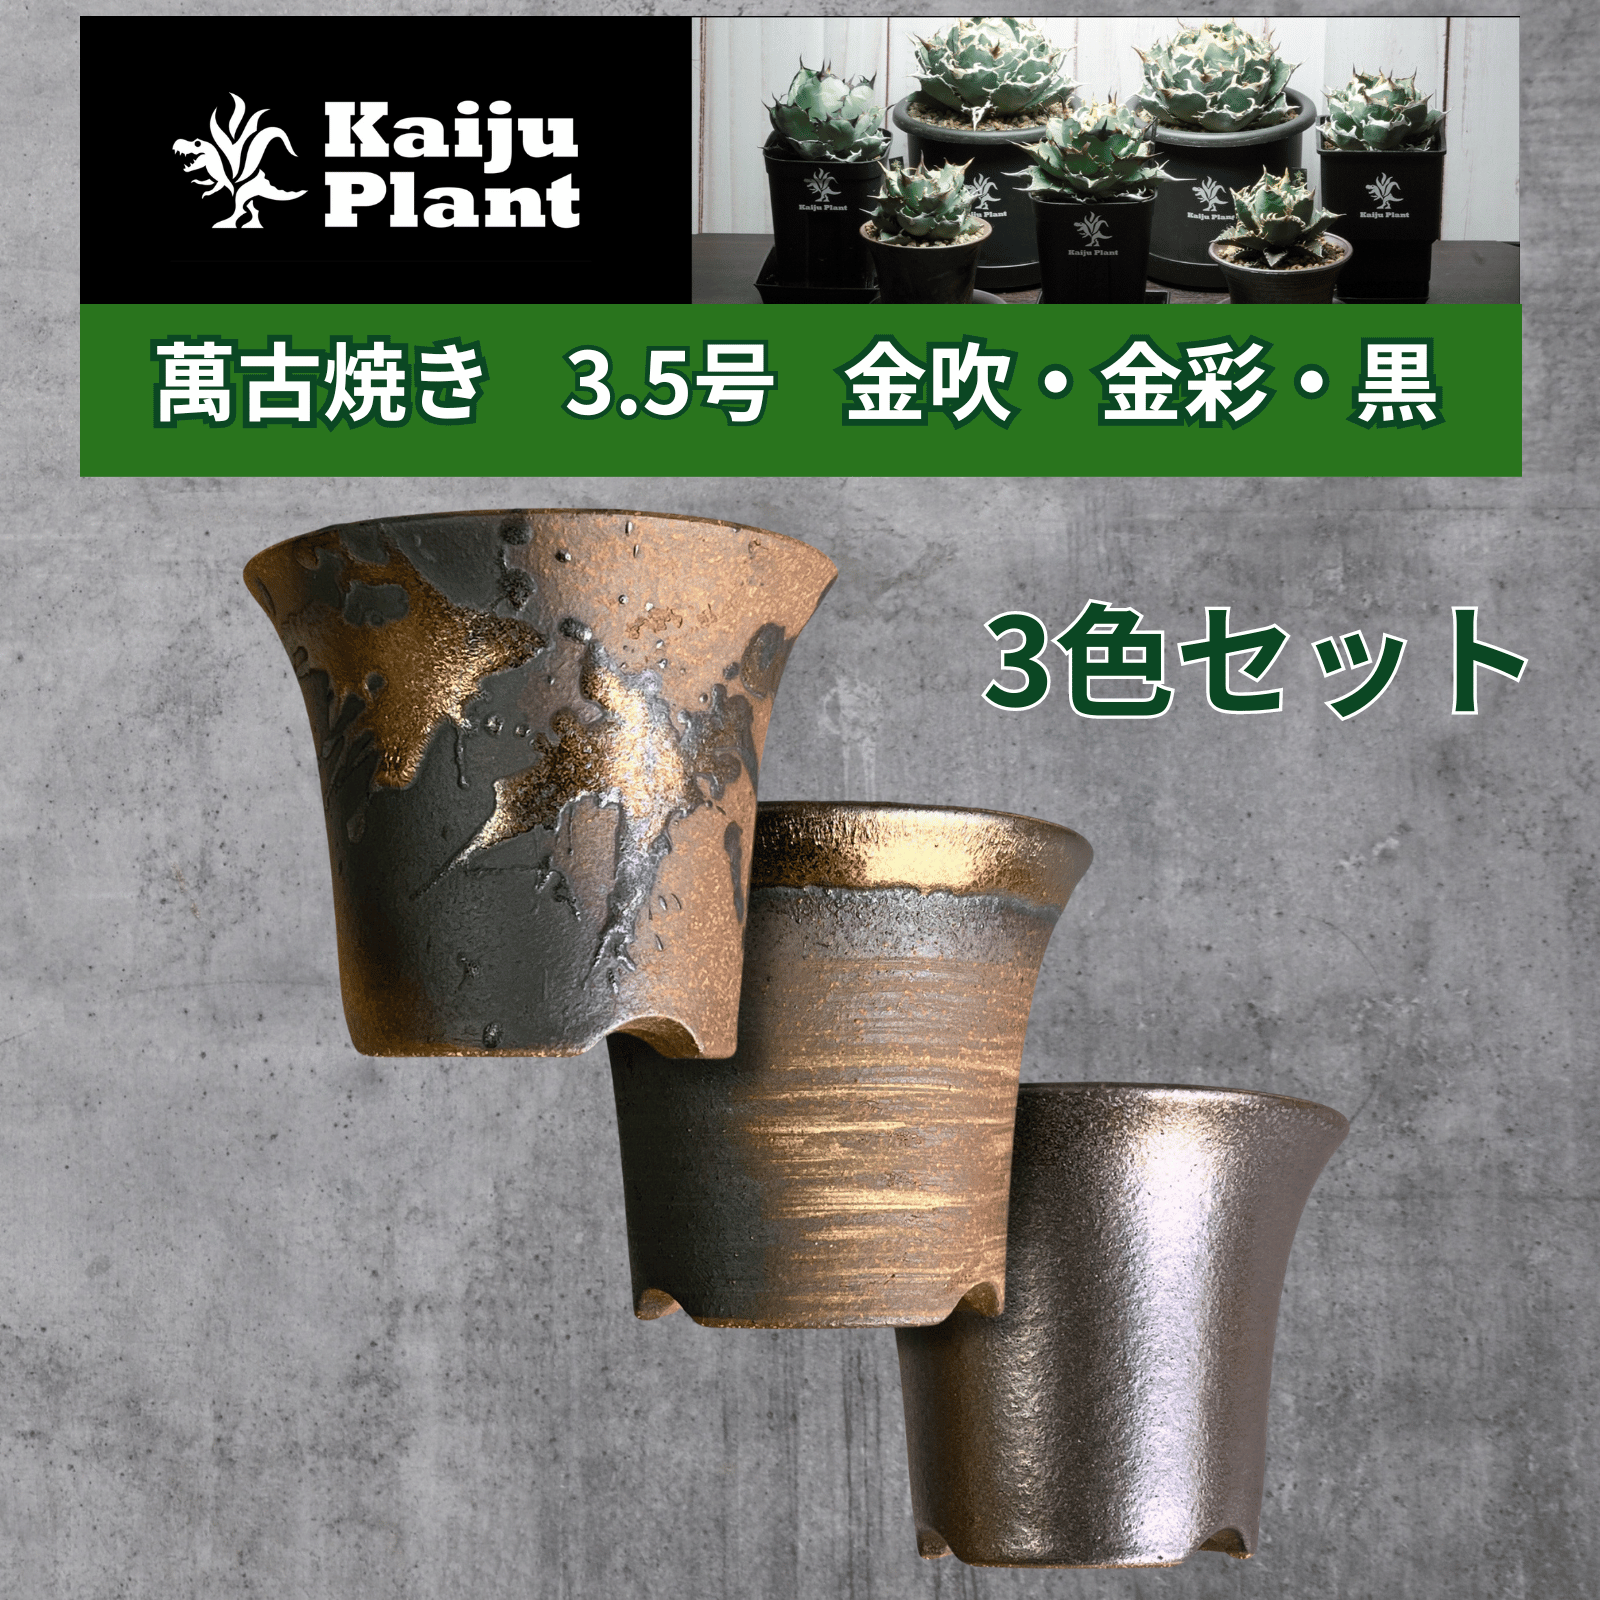 Kaiju Plant 萬古焼 3.5号 陶器鉢 ラッパ アガベ 多肉 塊根 用 金吹 金彩 